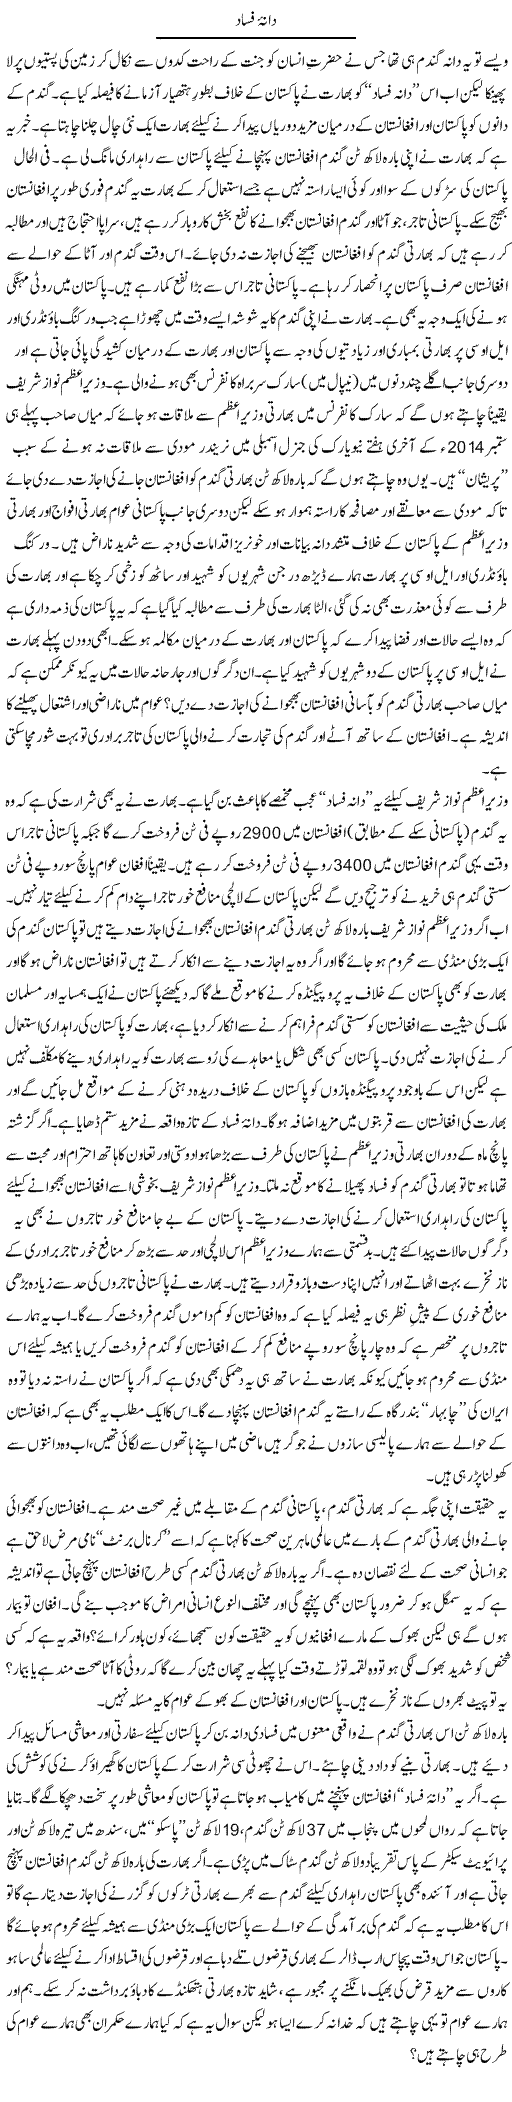 Dana e Fasaad | Tanveer Qaisar Shahid | Daily Urdu Columns